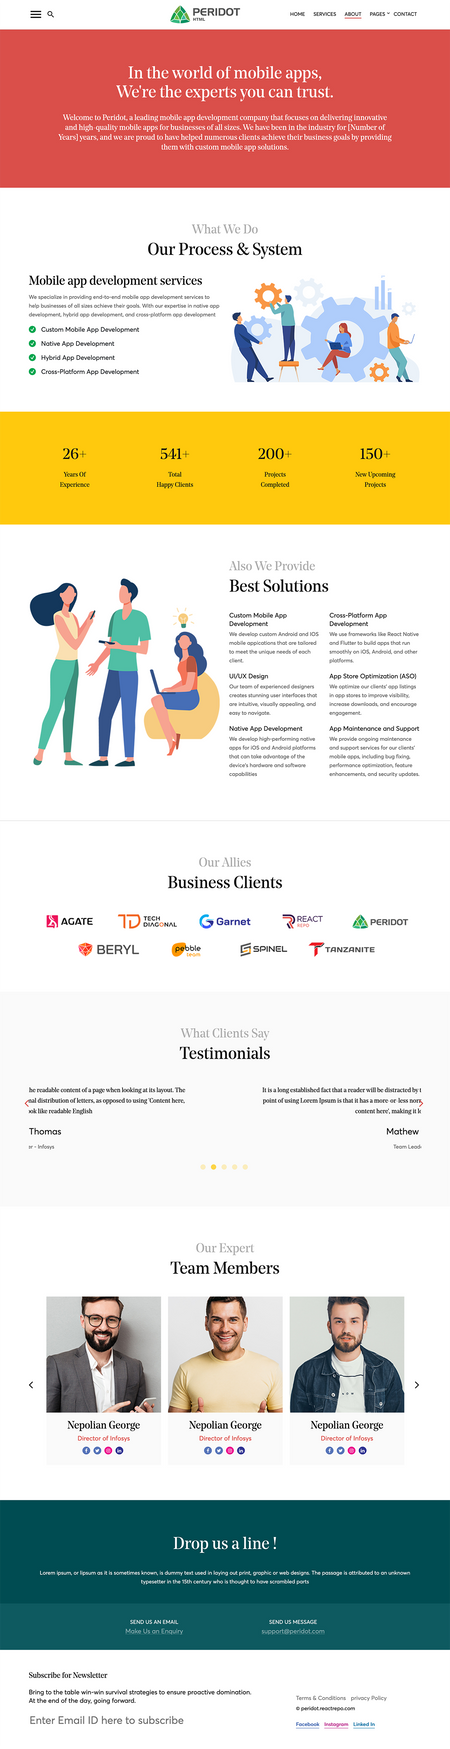 Peridot - Agency/Corporate HTML5 Template Image 6